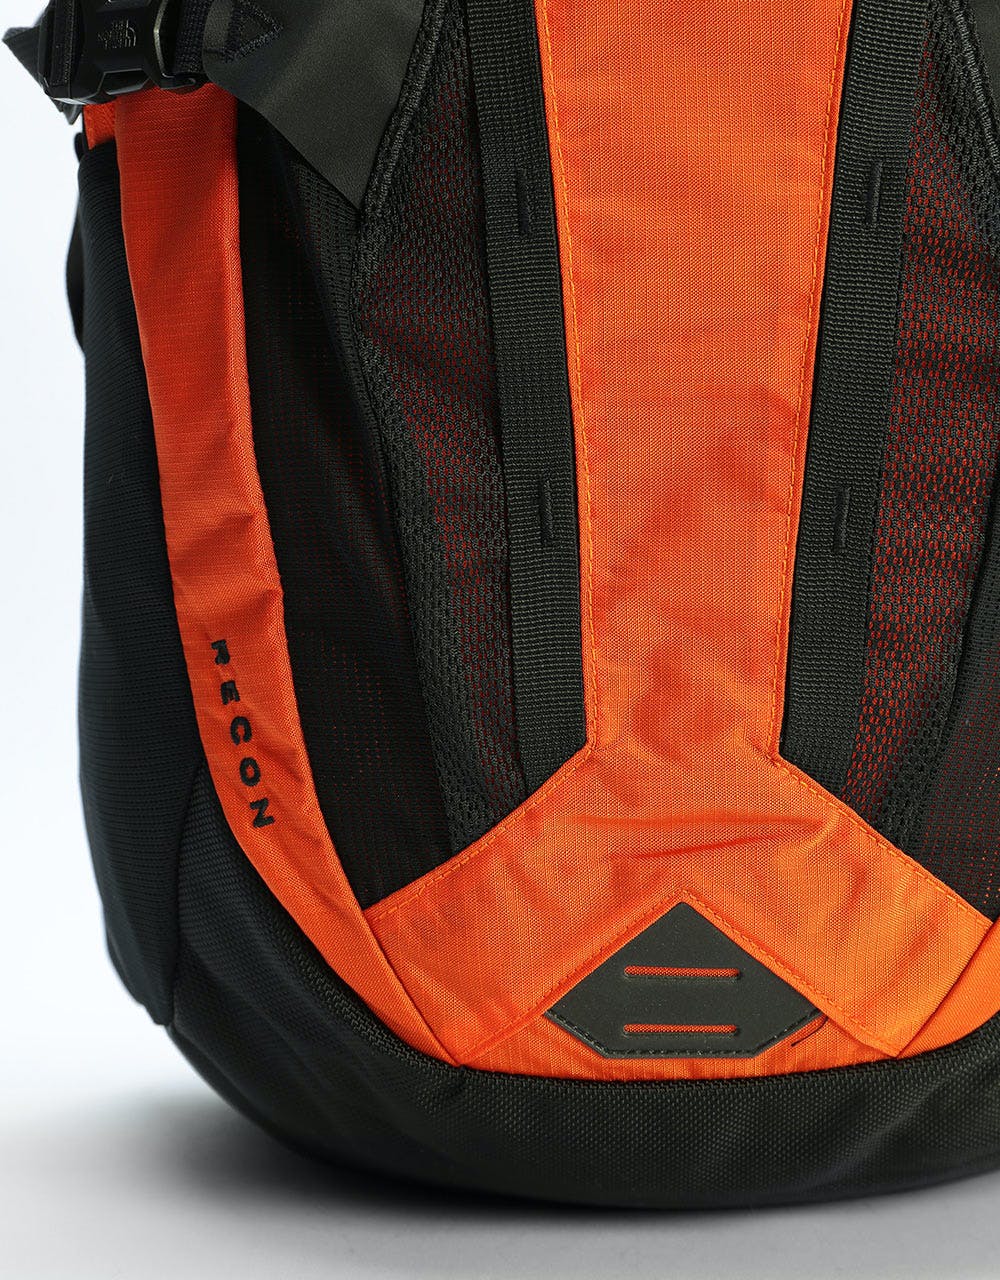 The North Face Recon Backpack - Persian Orange Ripstop/TNF Black